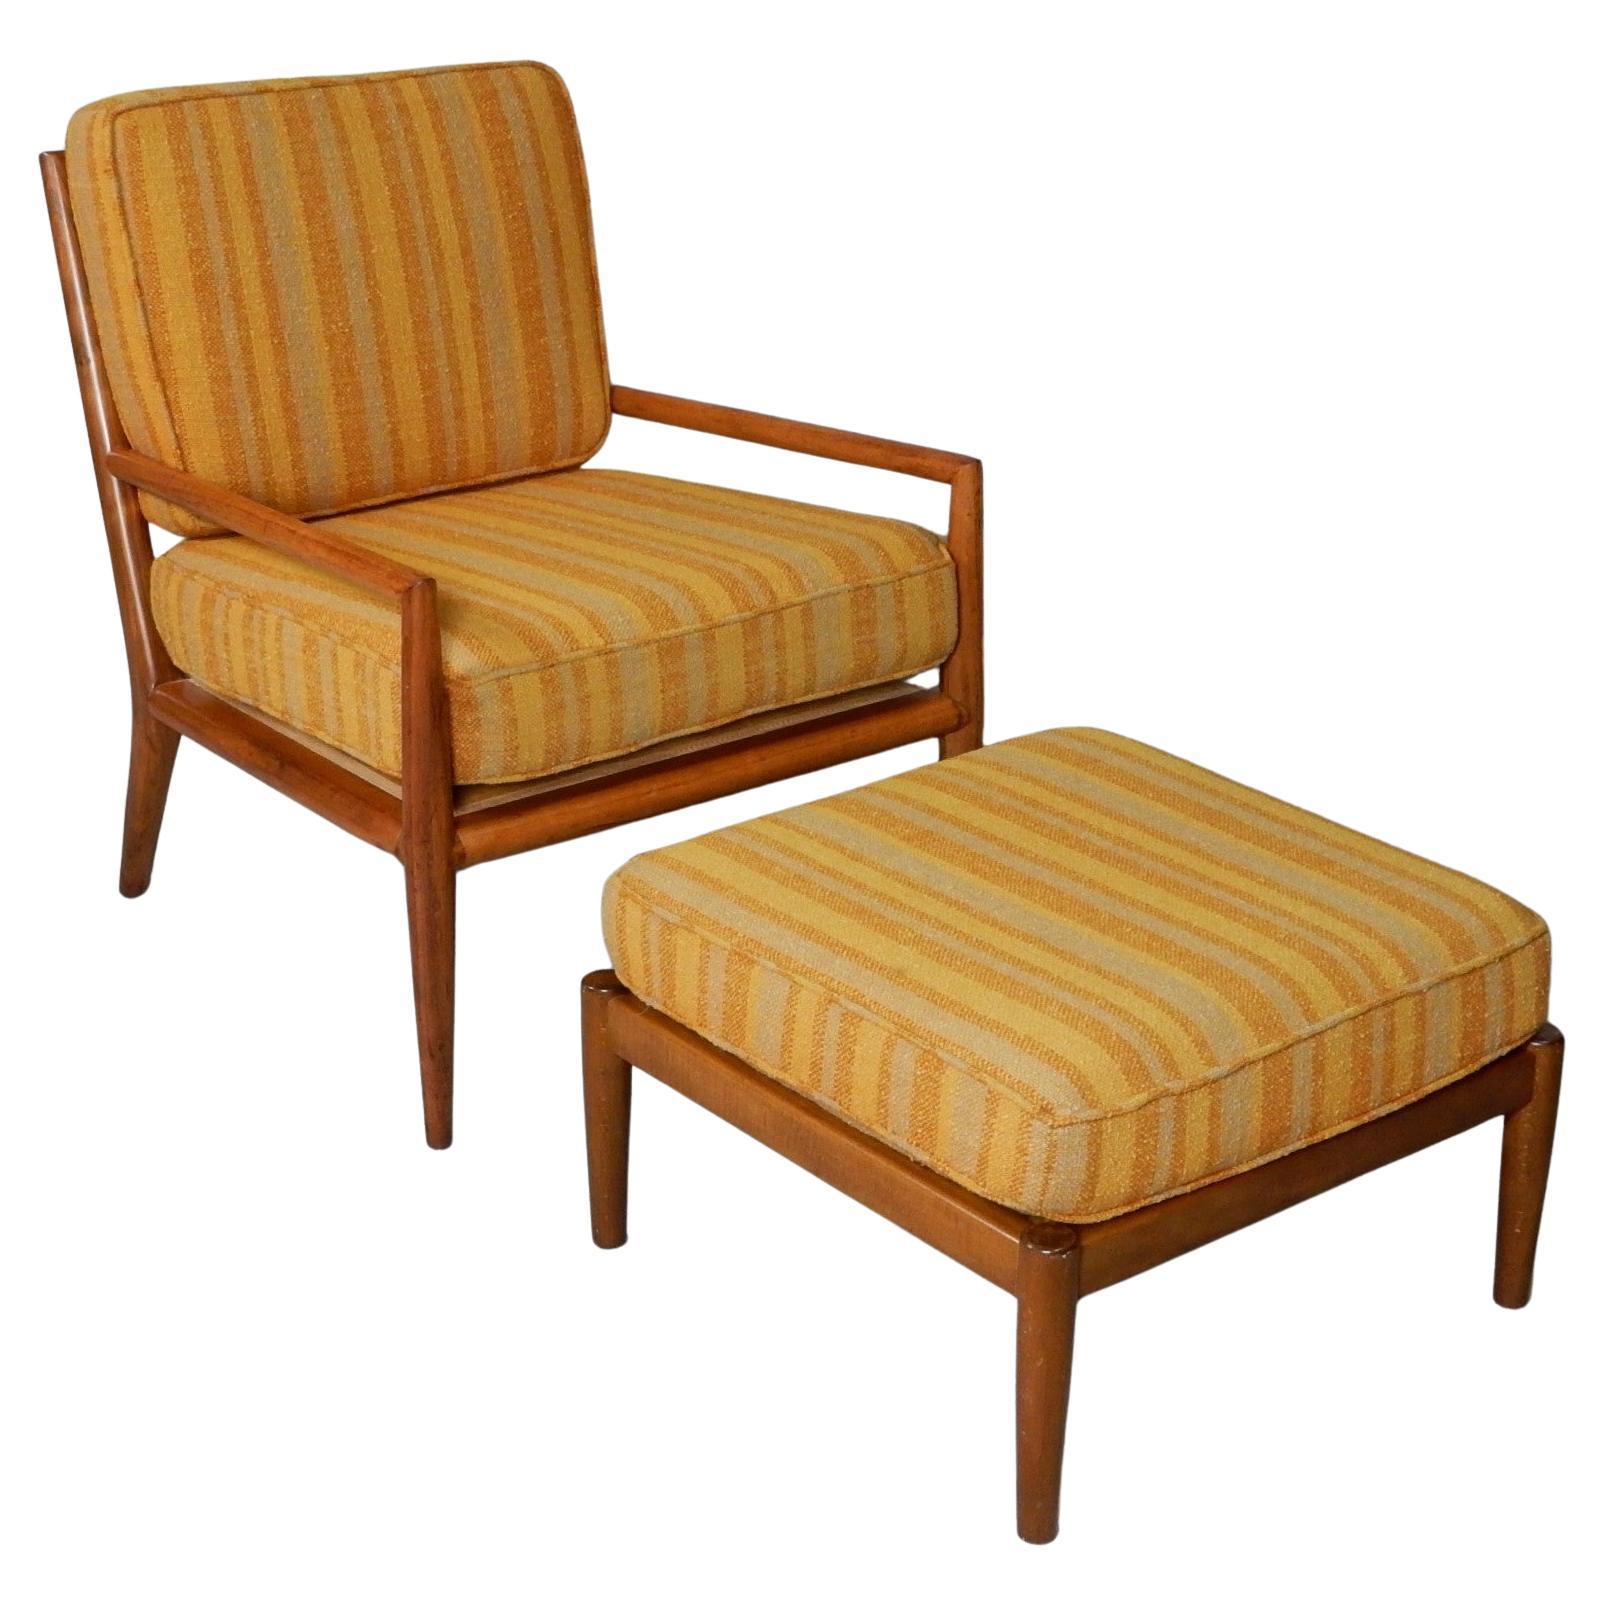 T.H. Robsjohn-Gibbings Lounge Chair & Ottoman by Widdicomb 1950's For Sale